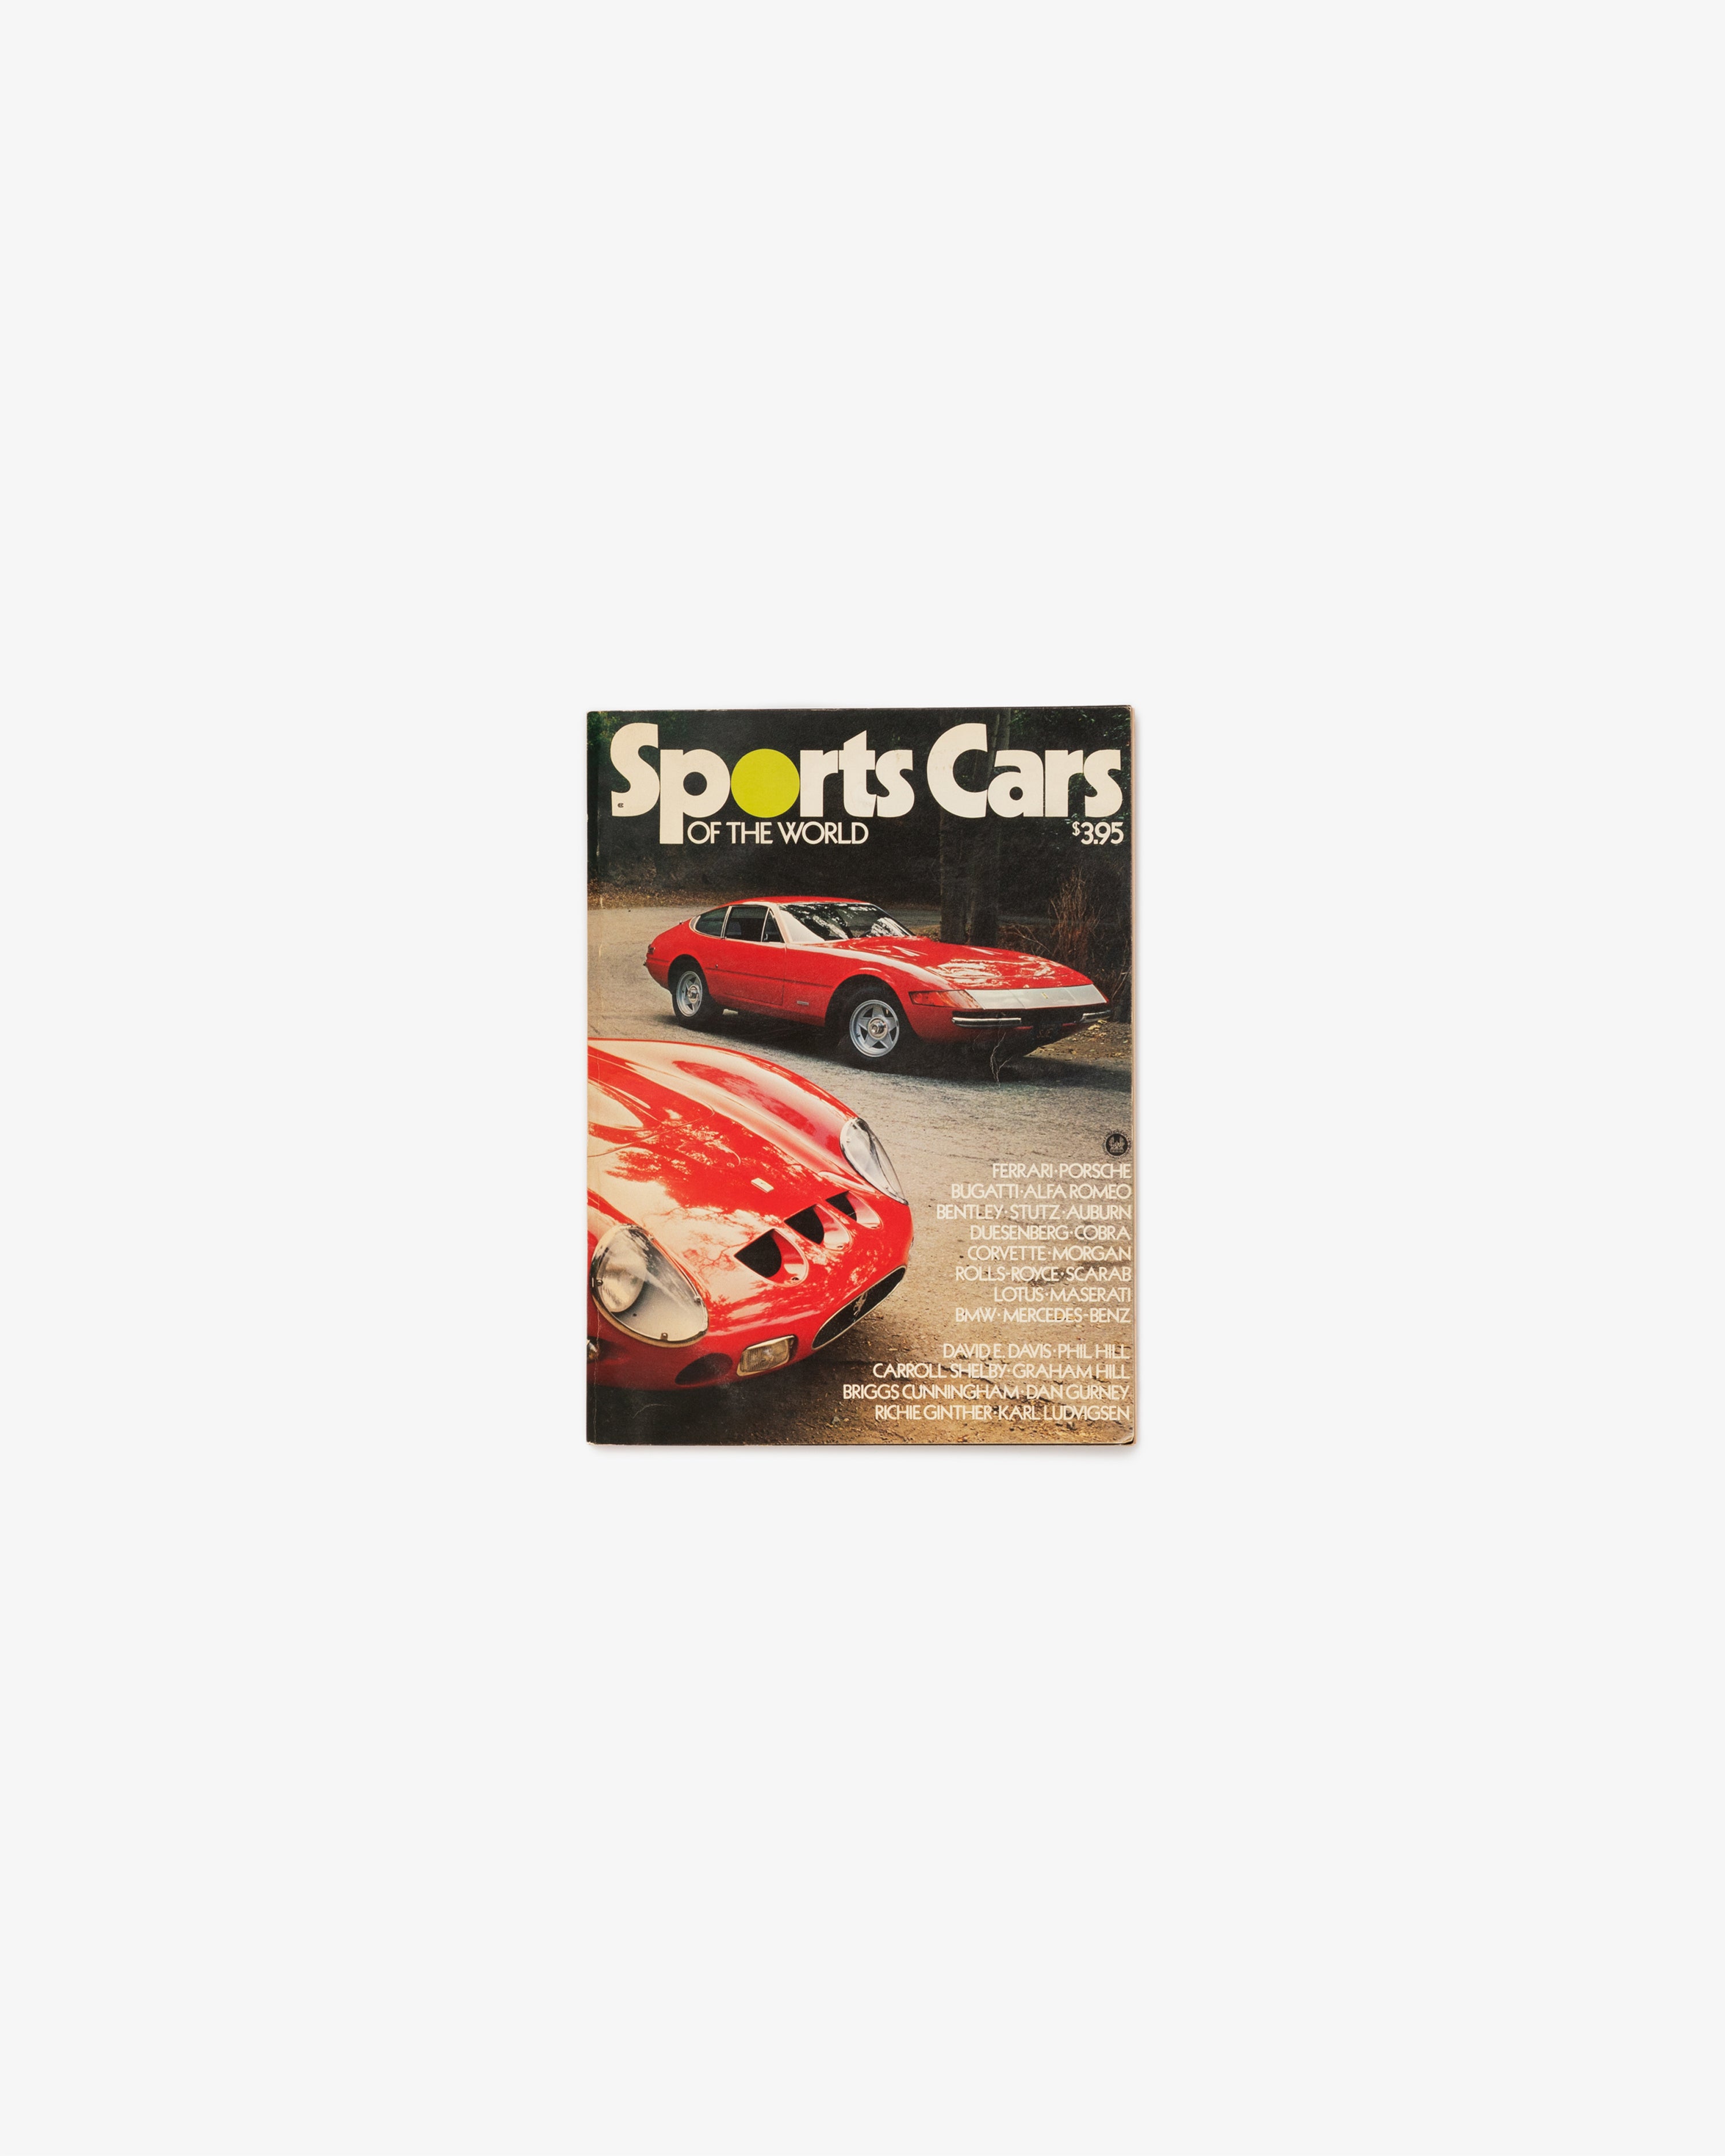 Sports Cars of the World Magazine